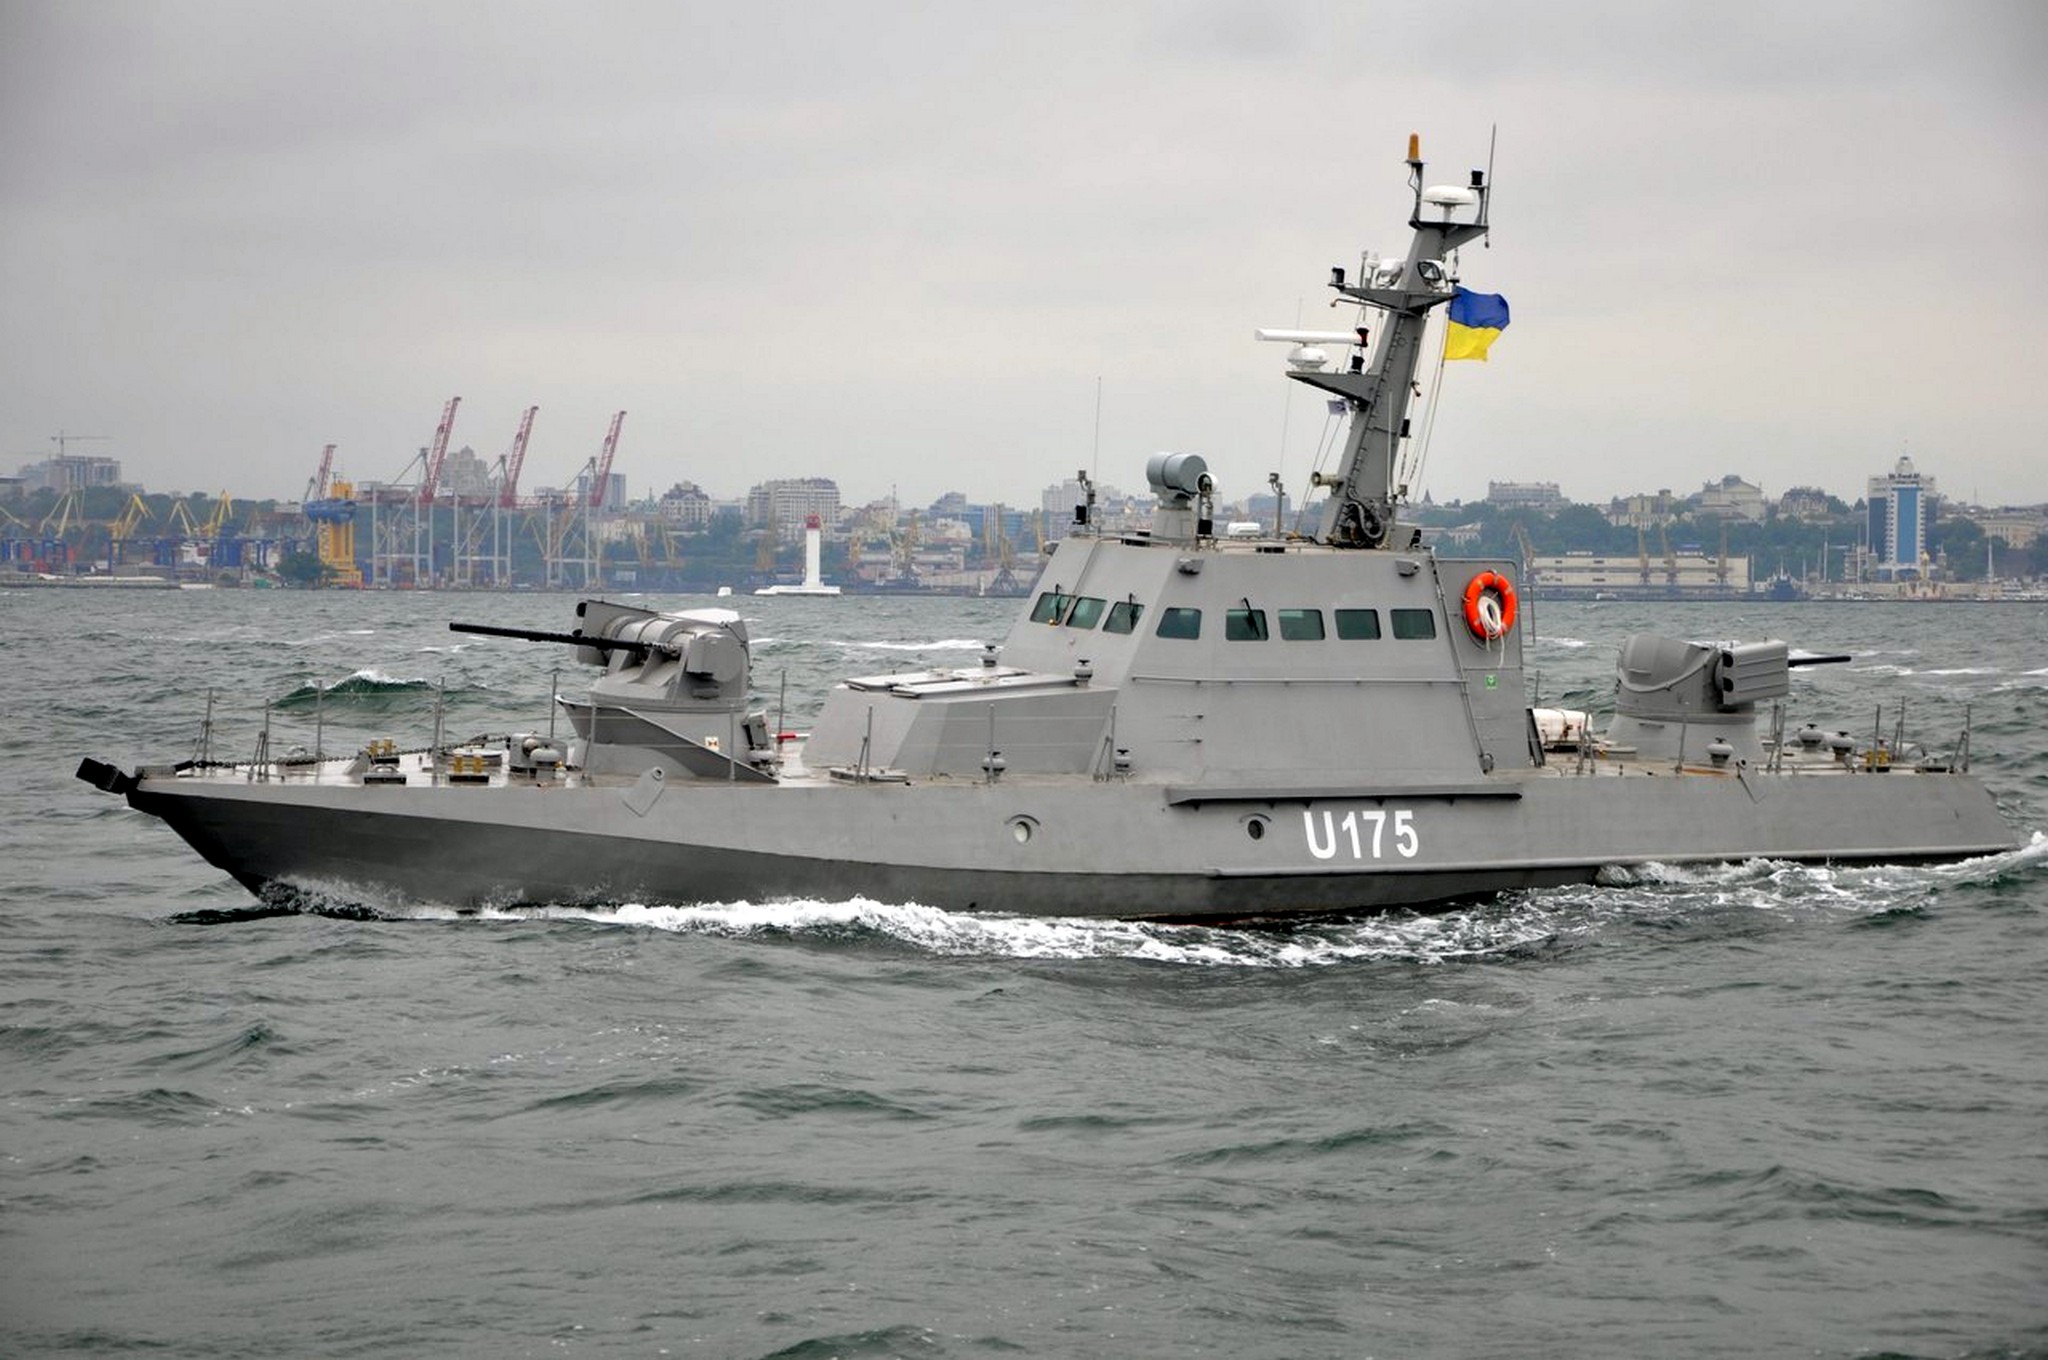 russia-s-monster-uav-slam-bangs-into-ukrainian-gunboat-the-hunter-becomes-hunted-watch-video